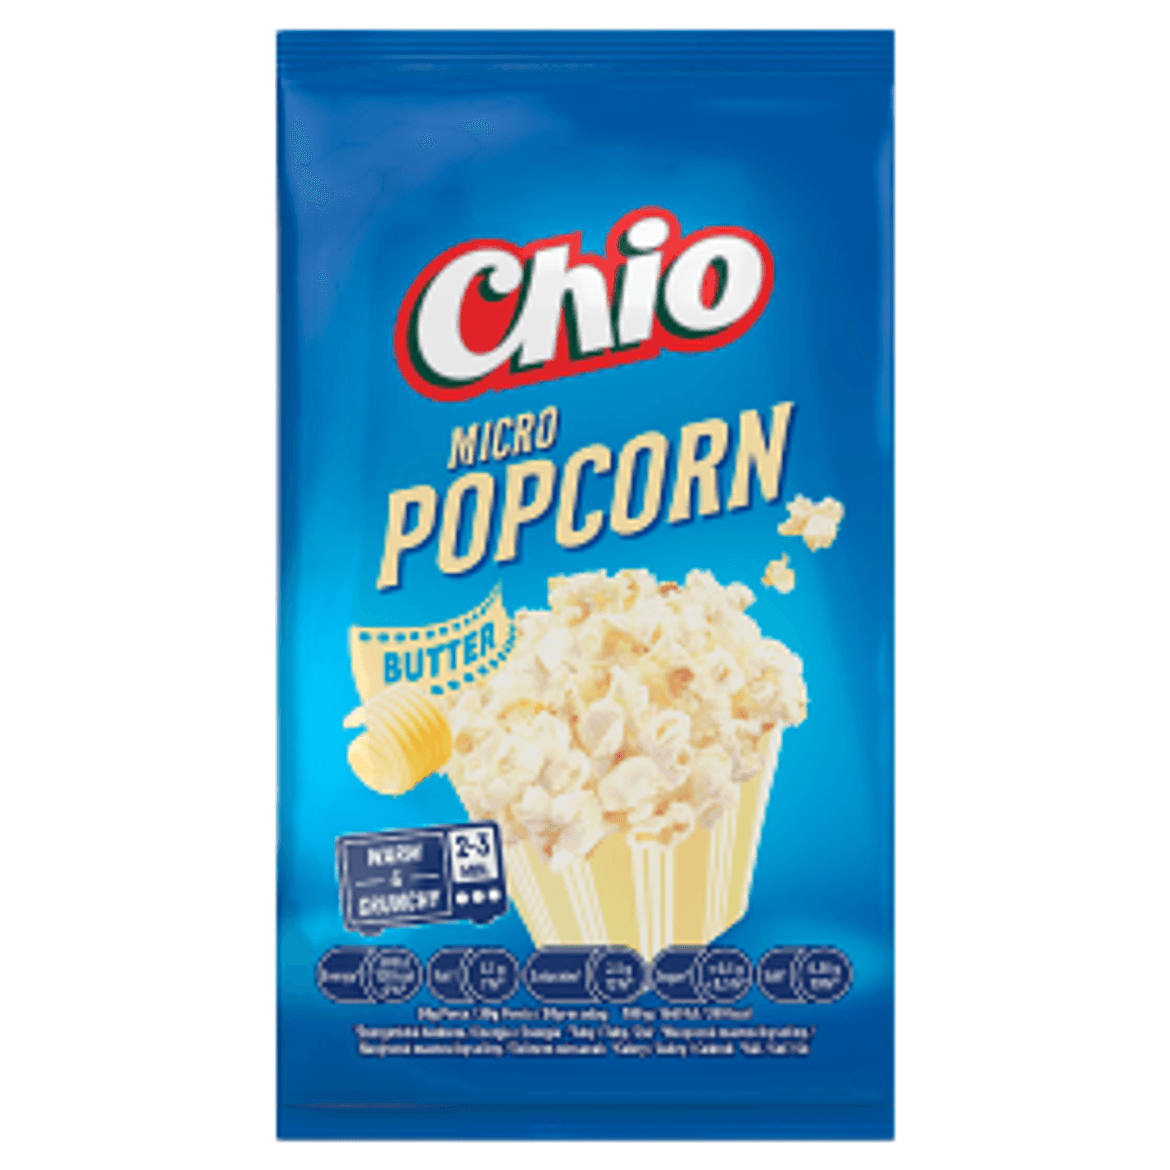 Chio Micro Popcorn vajas ízesítésű popcorn